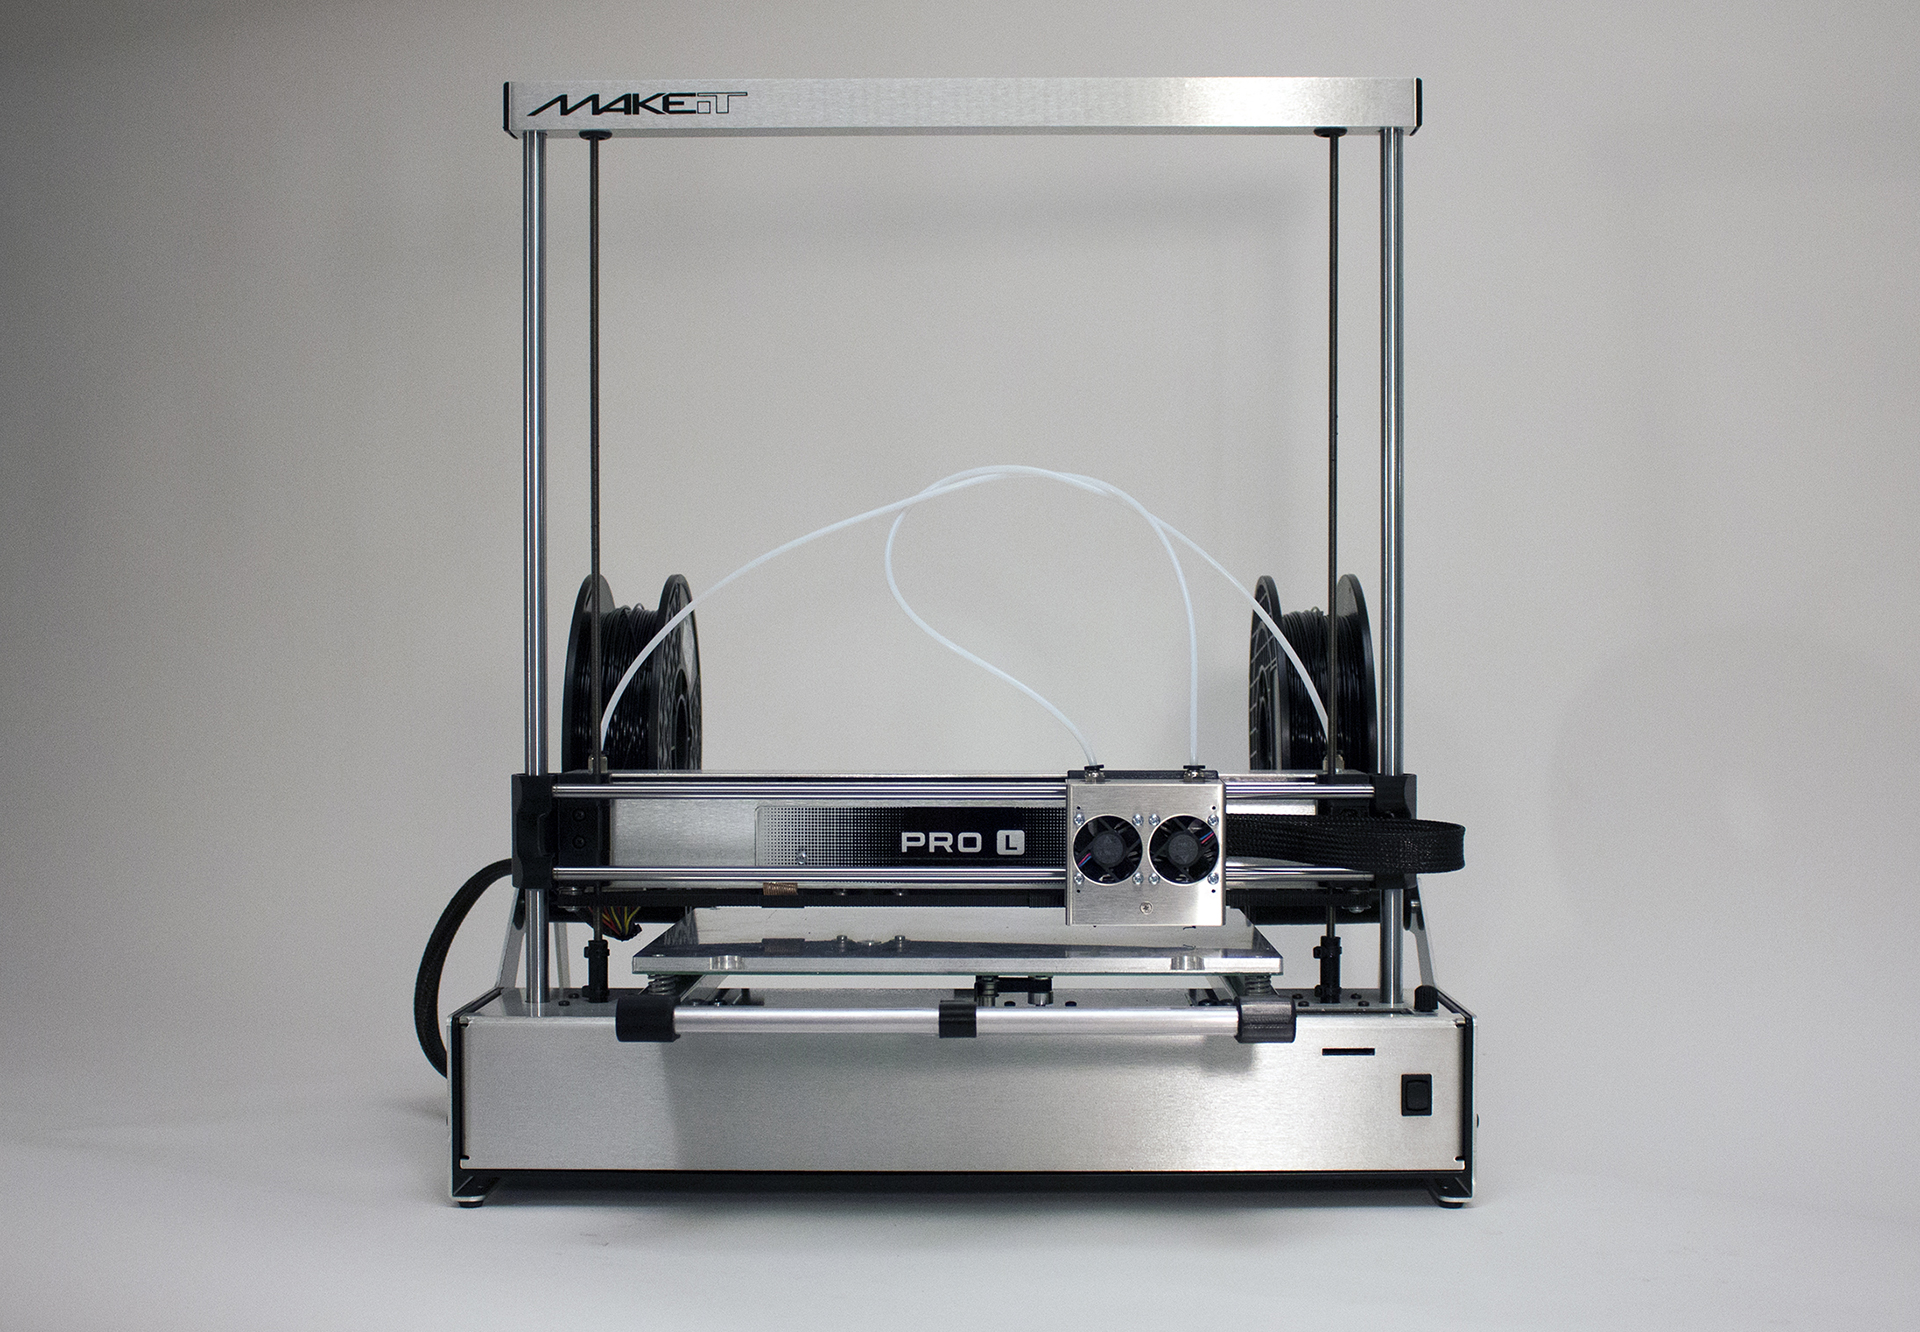  The shiny new MAKEit Pro-L desktop 3D printer. Yep, shiny! 